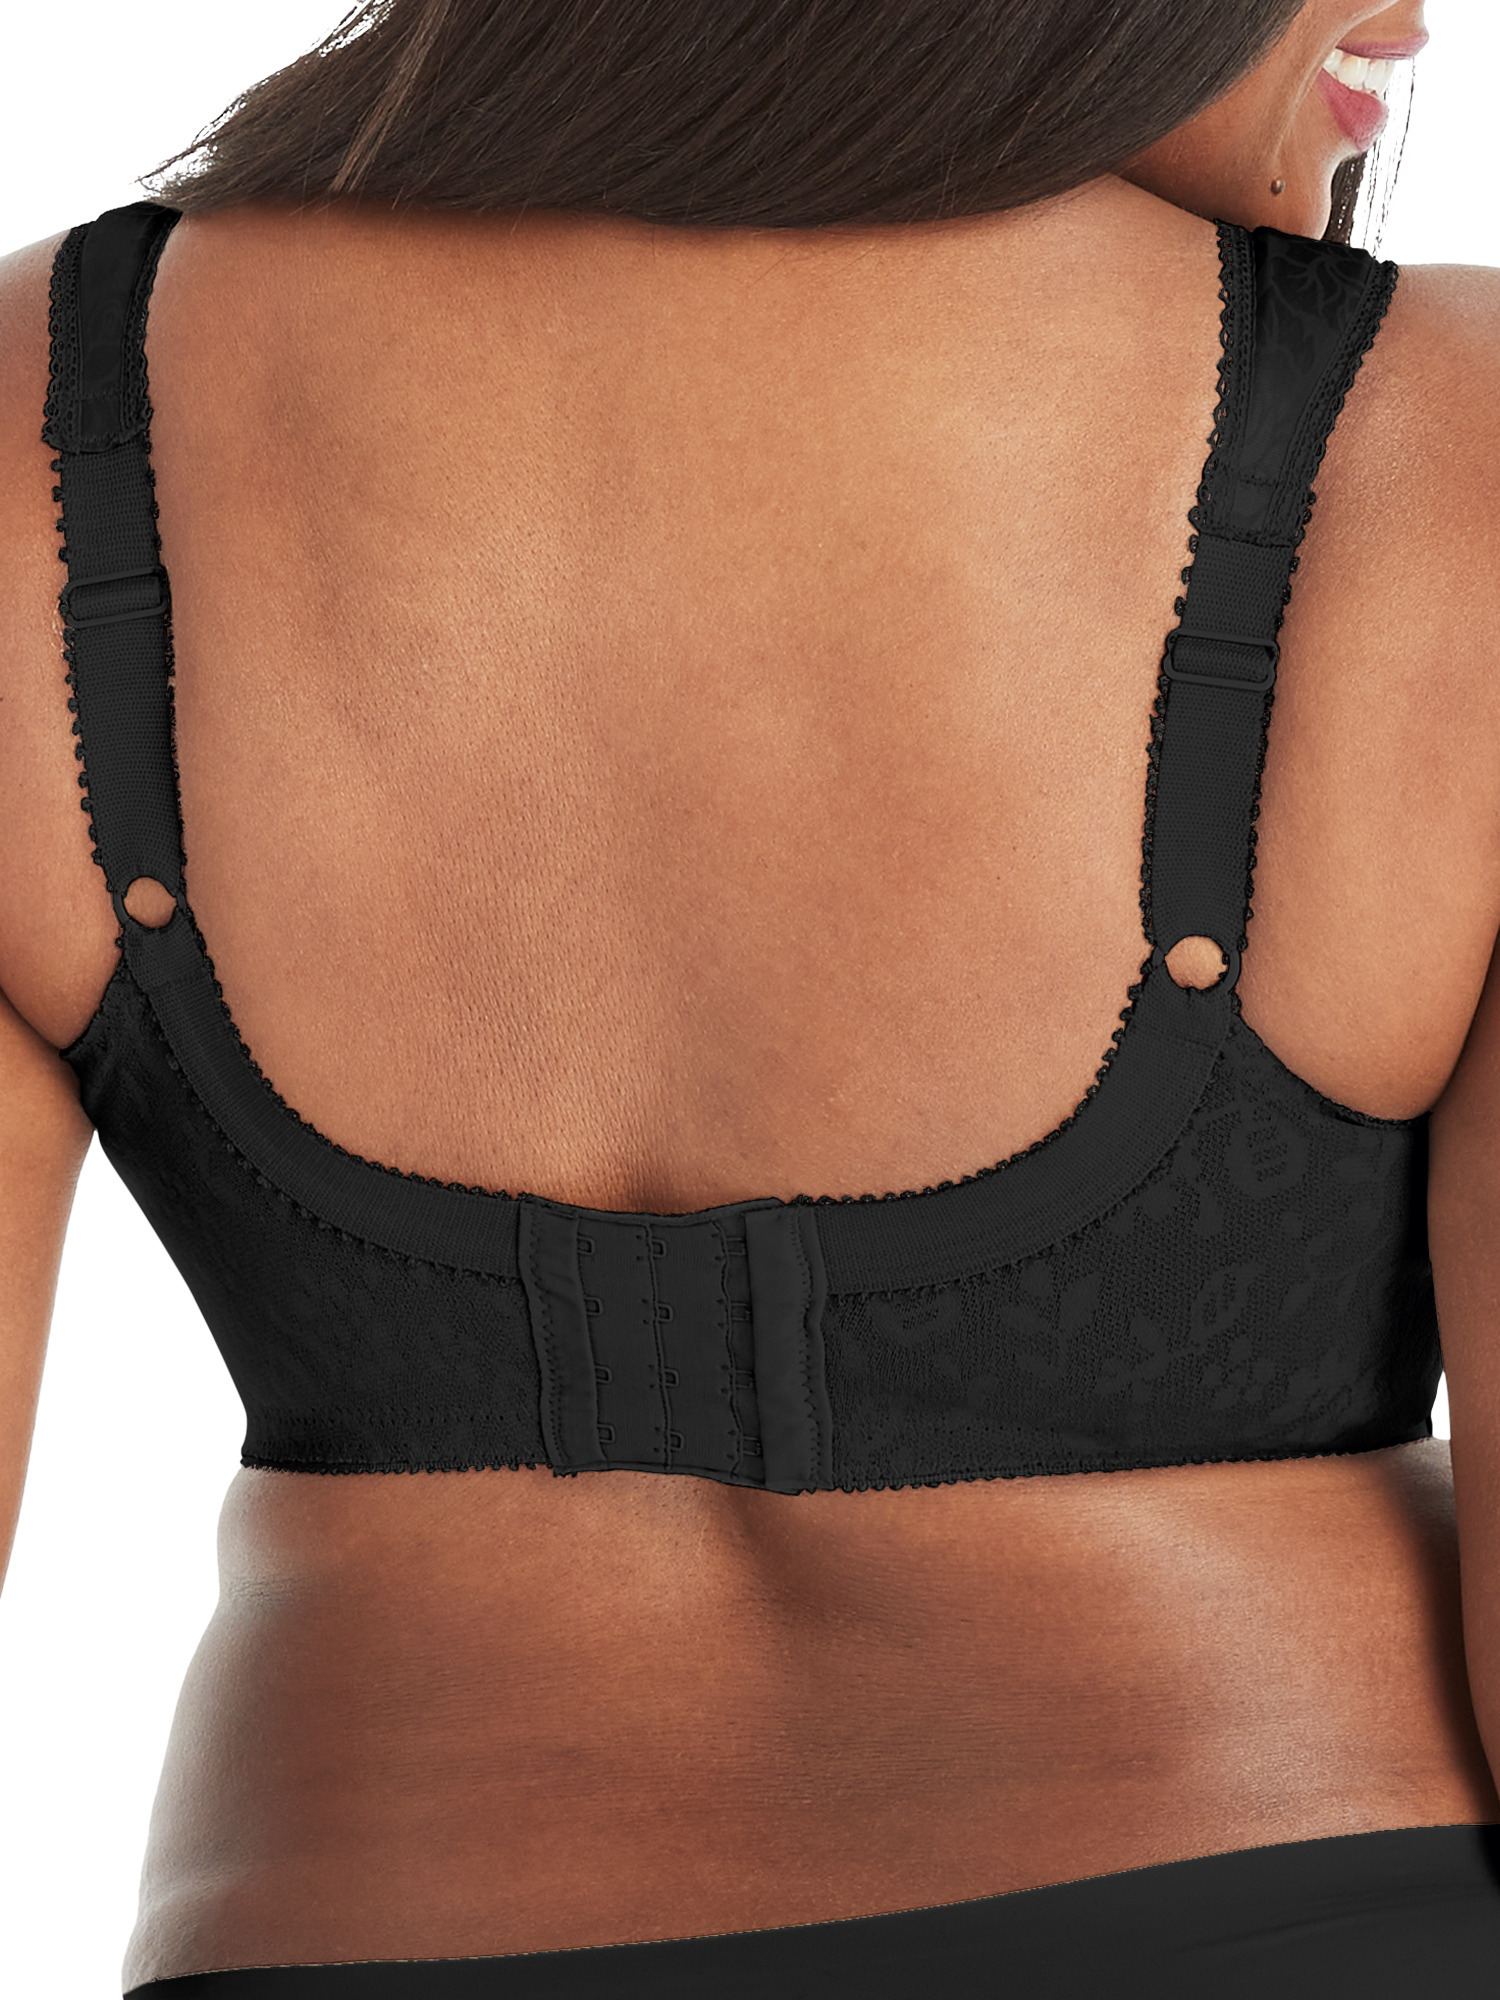 Playtex Women's Plus Size 18 Hour Original Comfort Strap Bra Black Size 36C  Bv for sale online